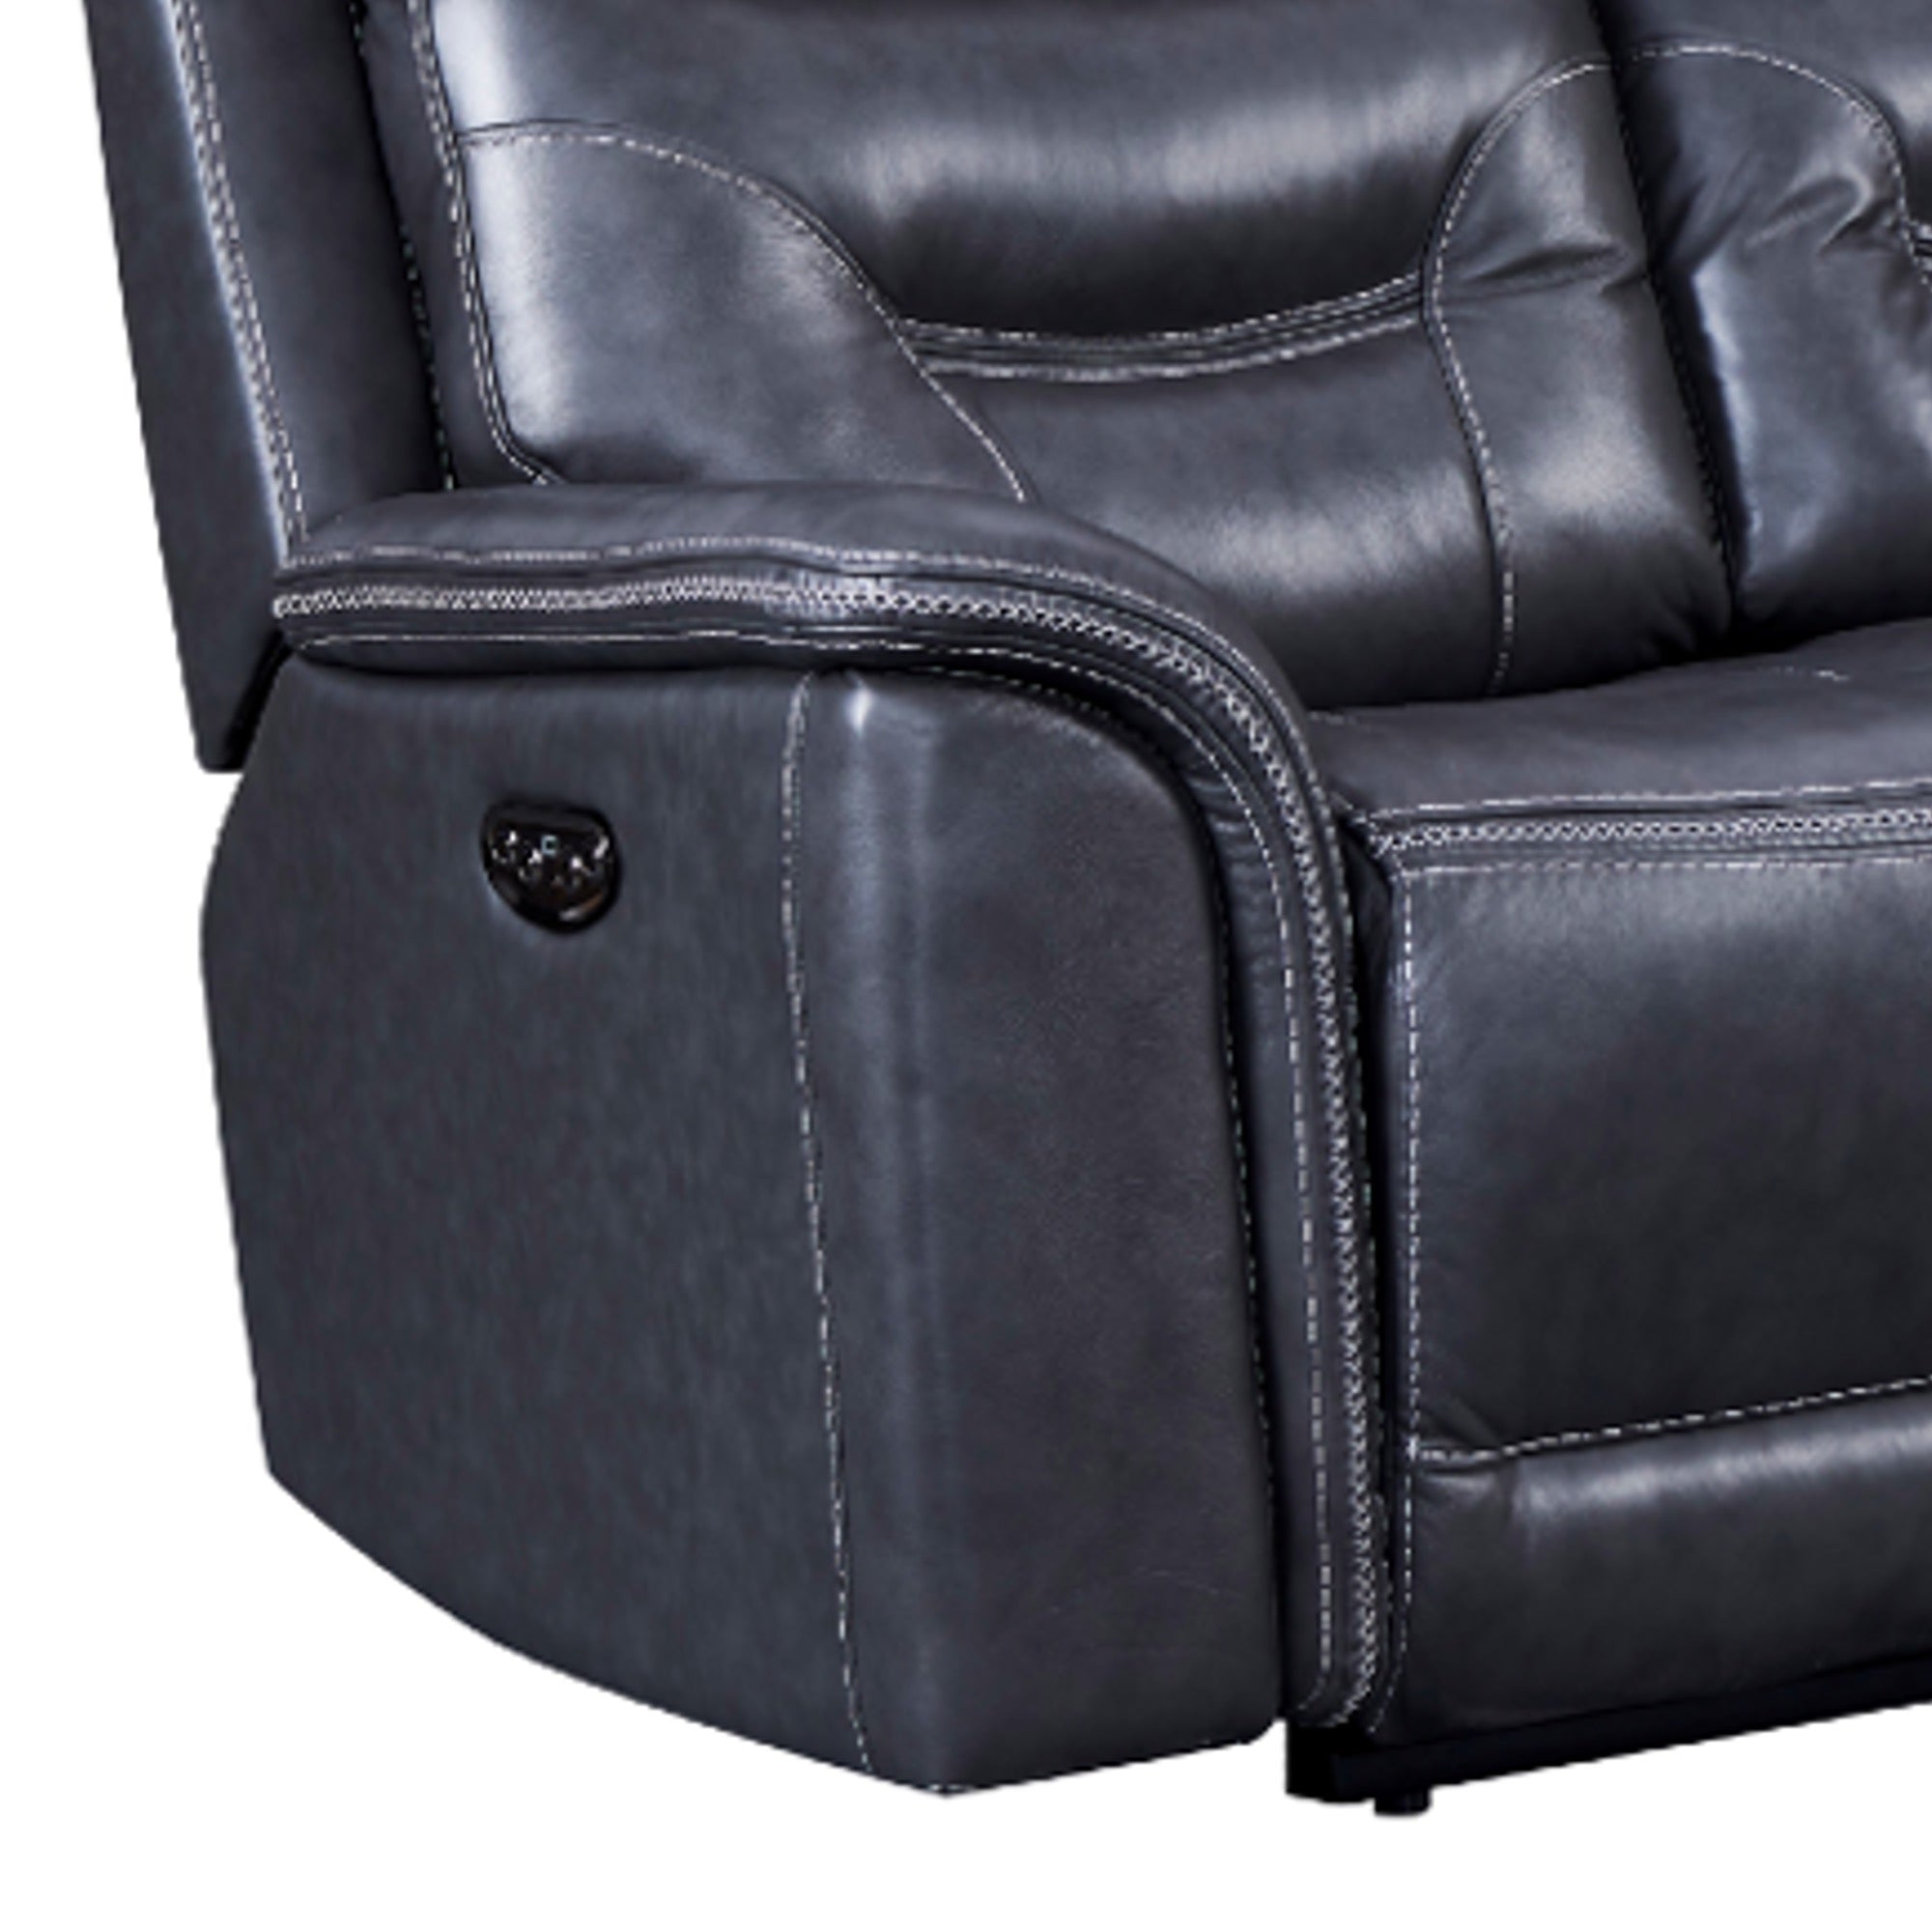 Bullard Power Reclining Leather Sofa